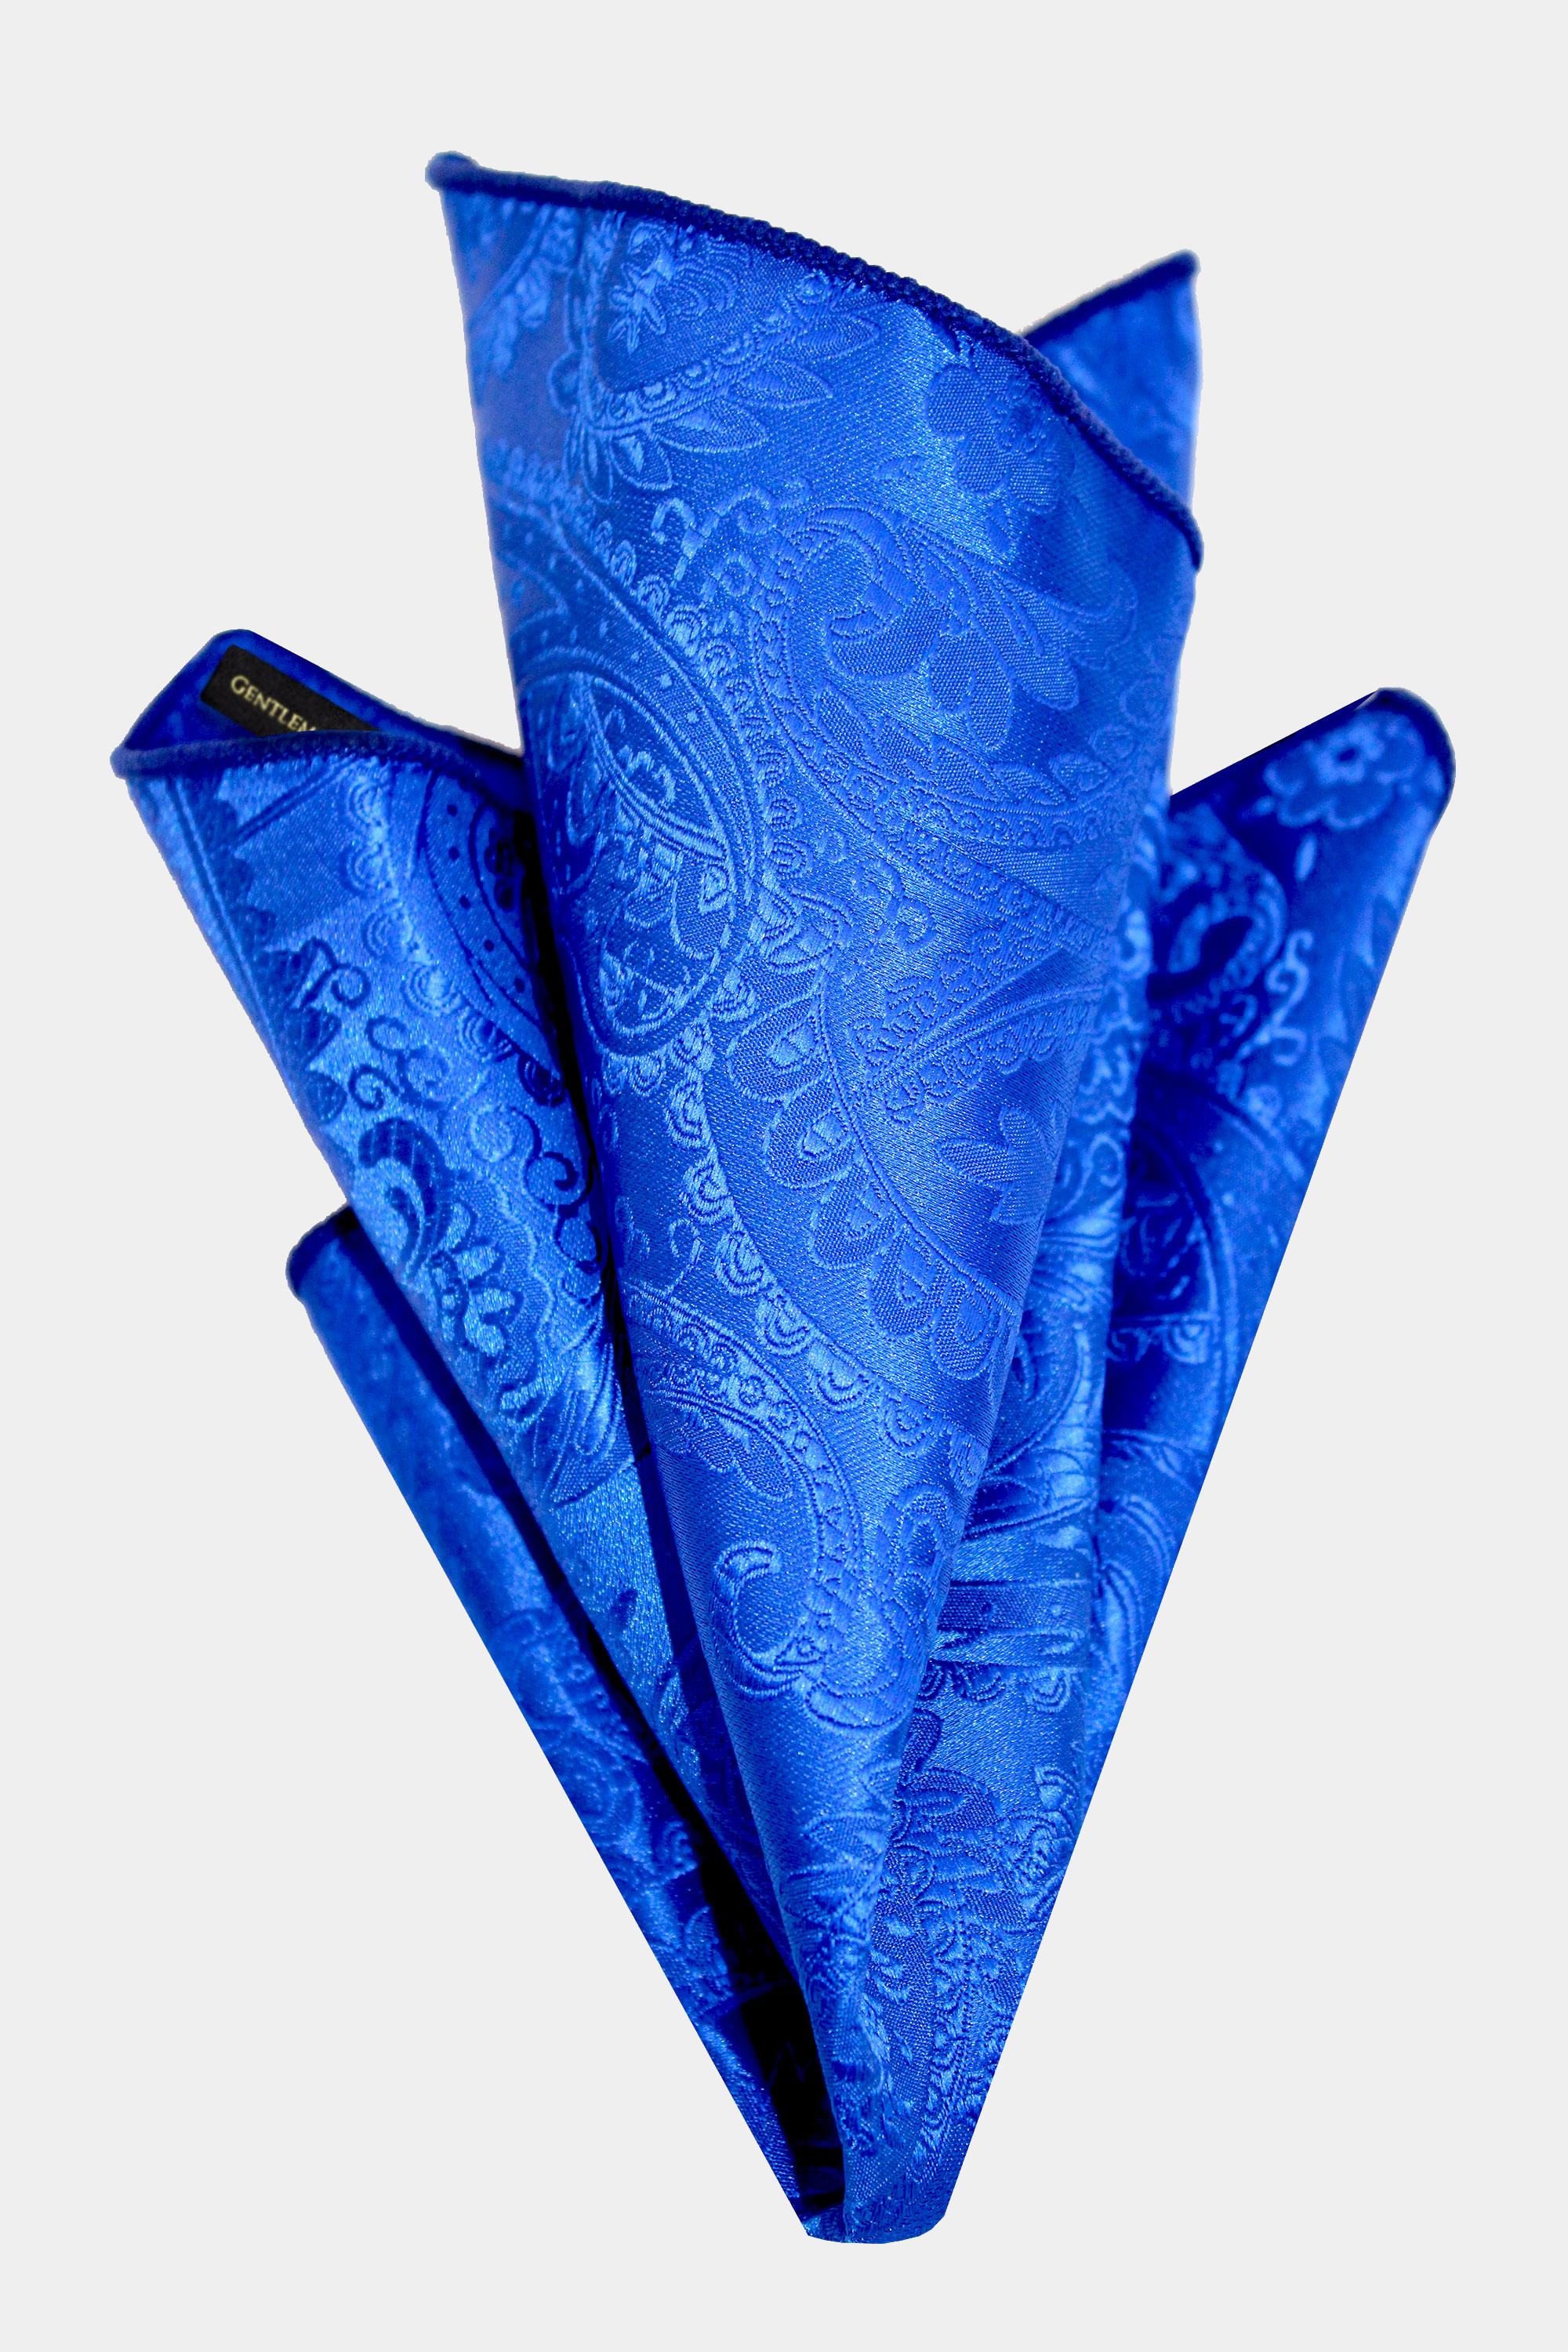 Royal-Blue-Paisley-Pocket-Square-Handkerchief-from-Gentlemansguru.com_